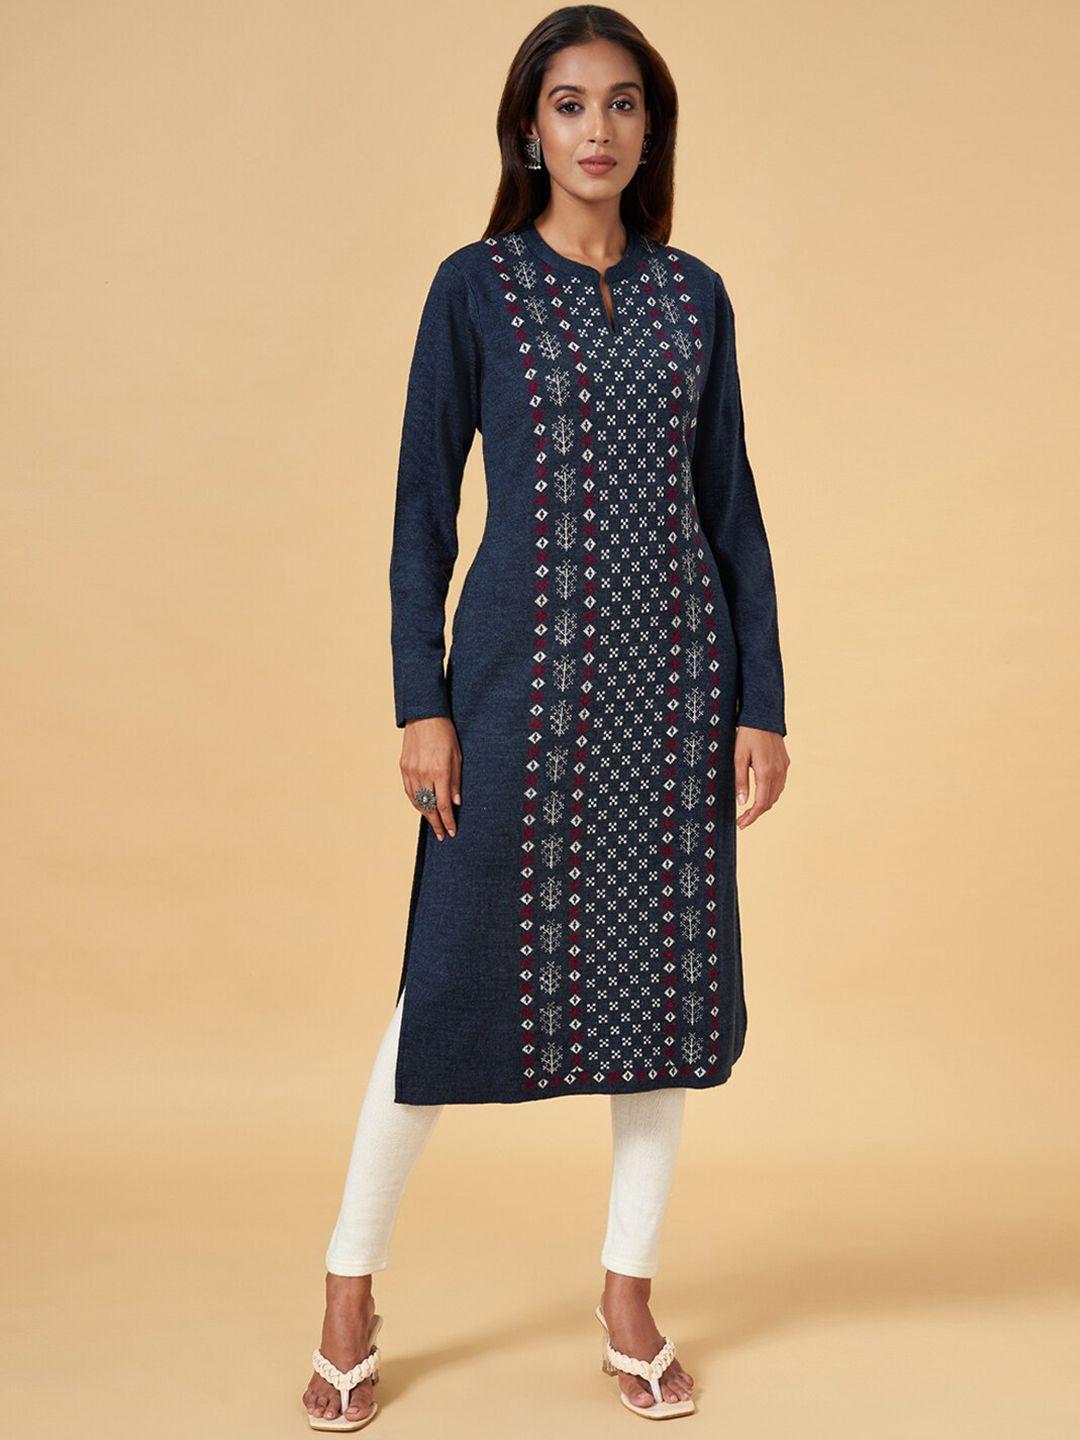 rangmanch by pantaloons geometric woven design keyhole neck acrylic straight kurta